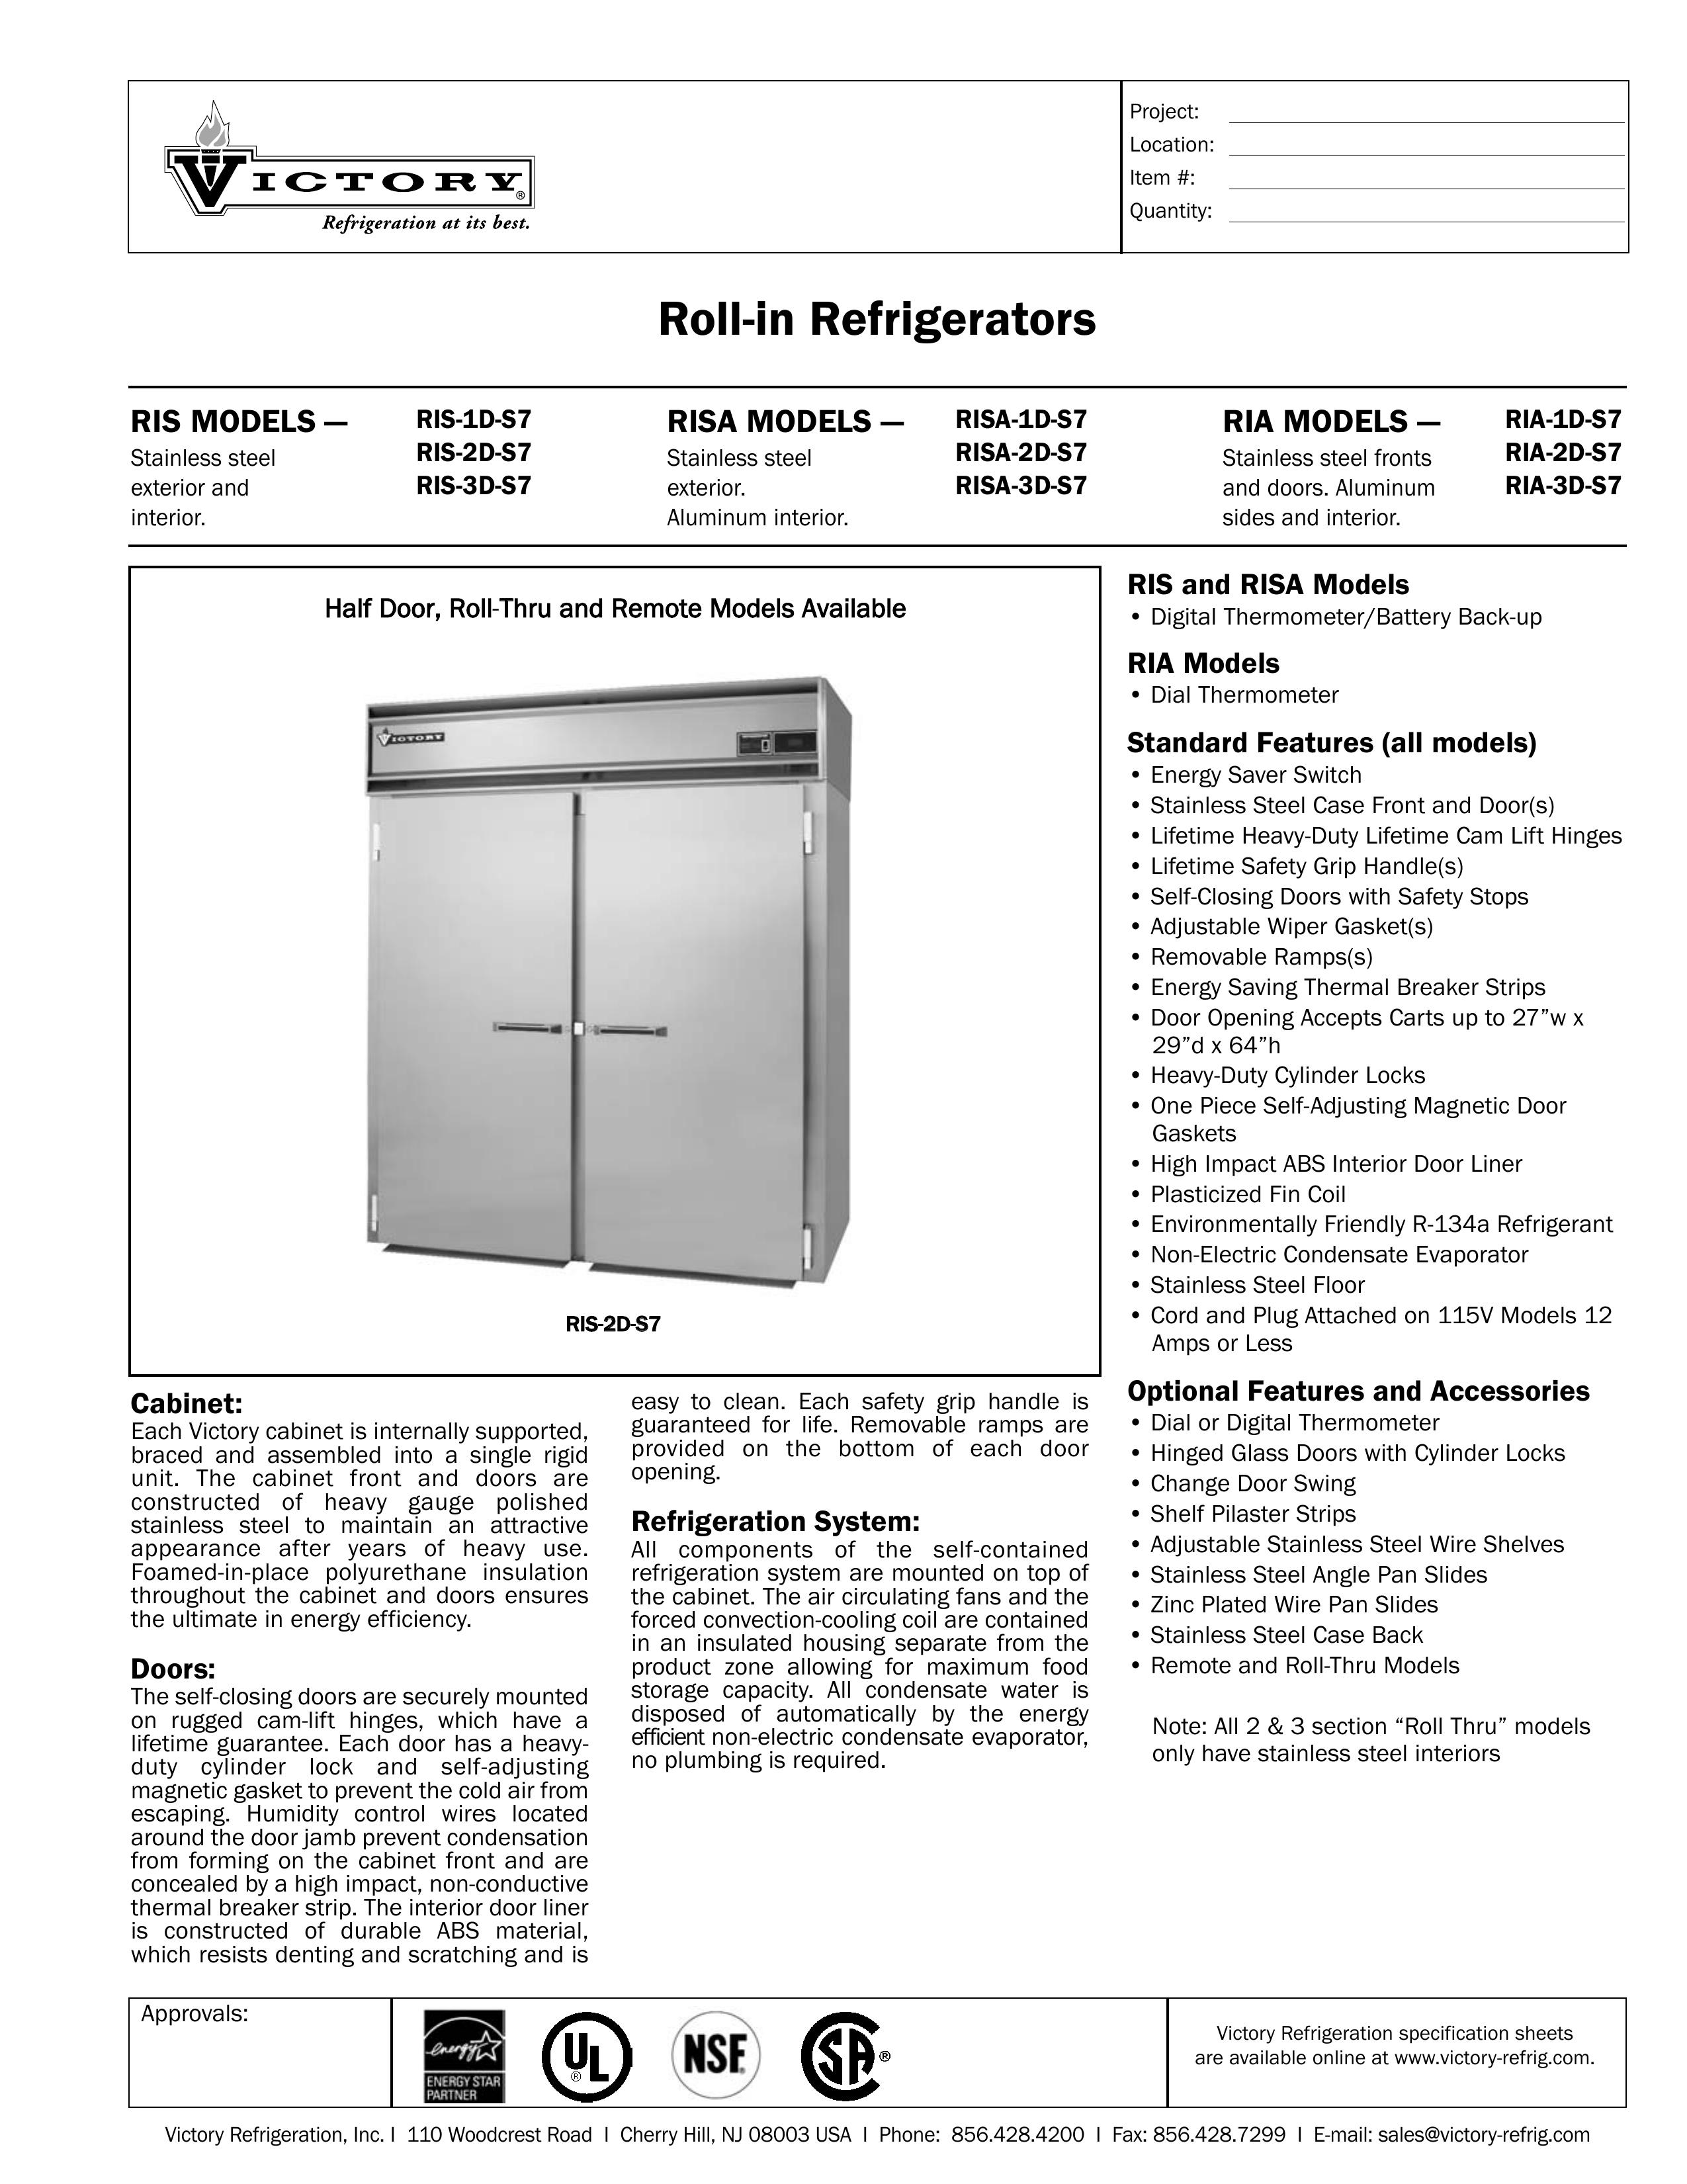 Victory Refrigeration RIA-2D-S7 Refrigerator User Manual